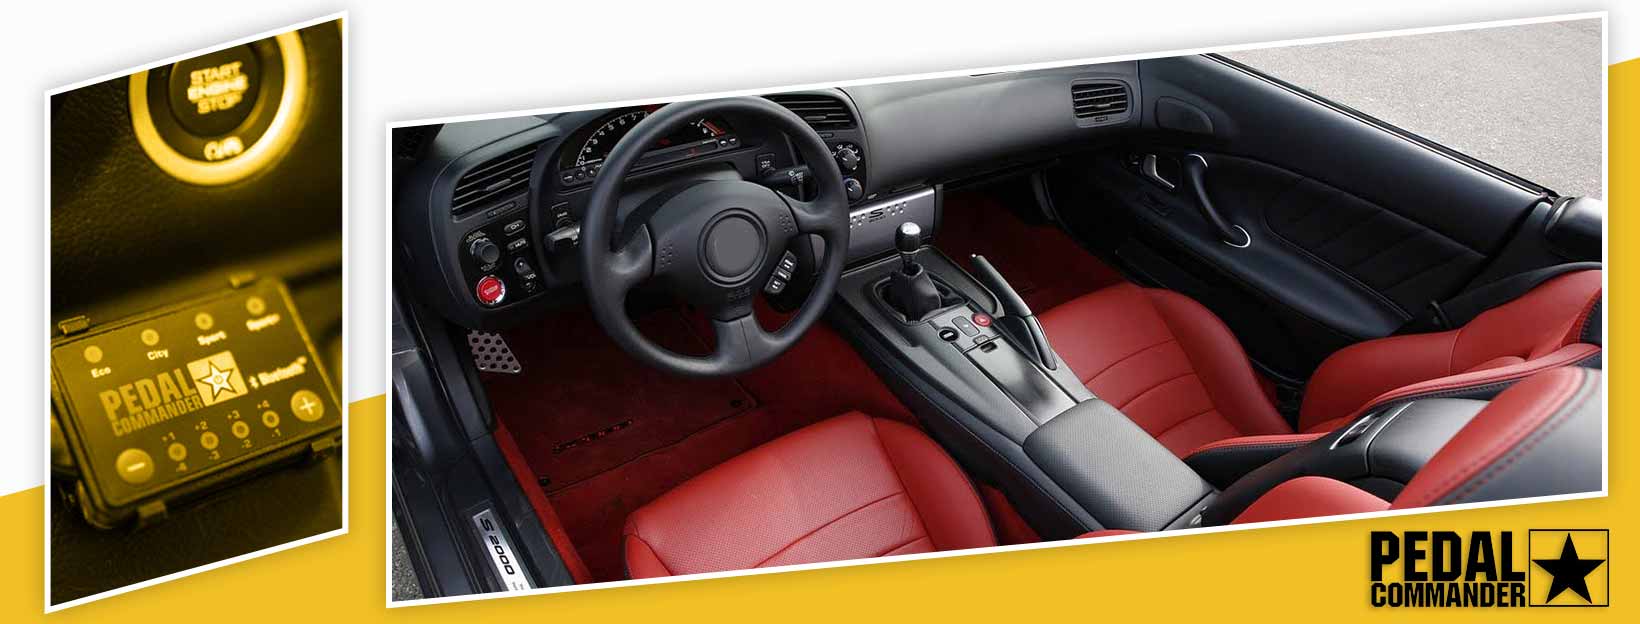 Pedal Commander for Honda S2000 - interior